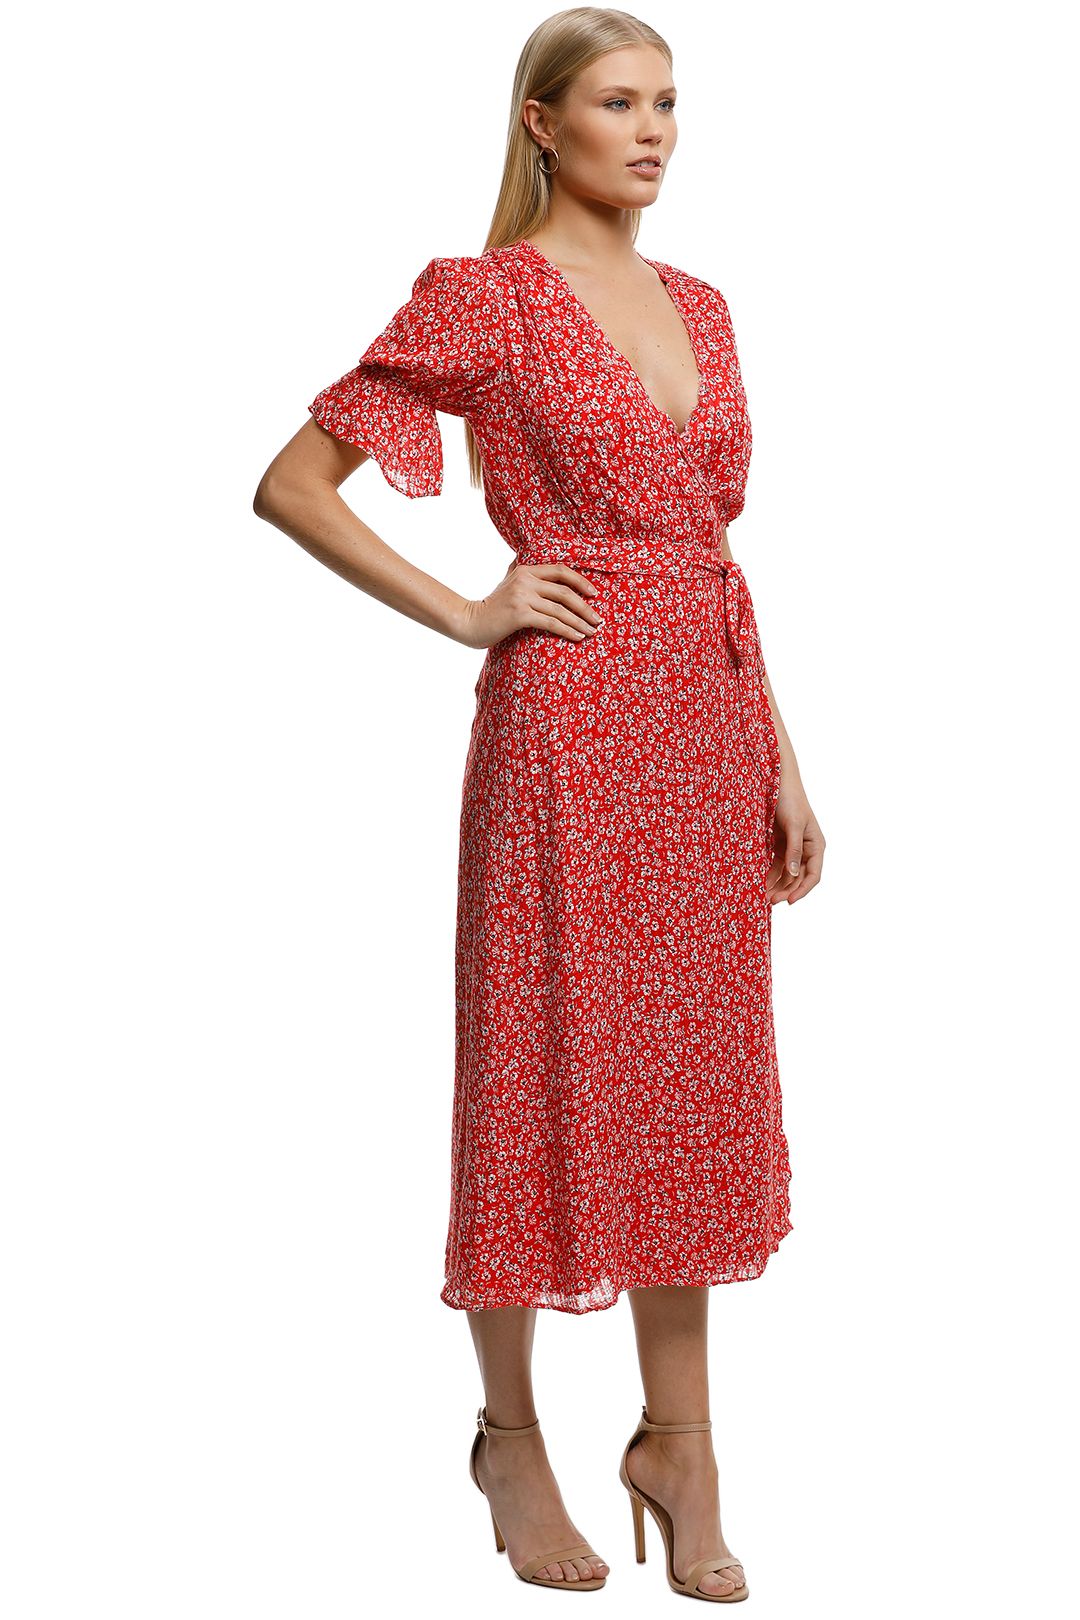 Claret Midi Dress by Stevie May for Rent | GlamCorner